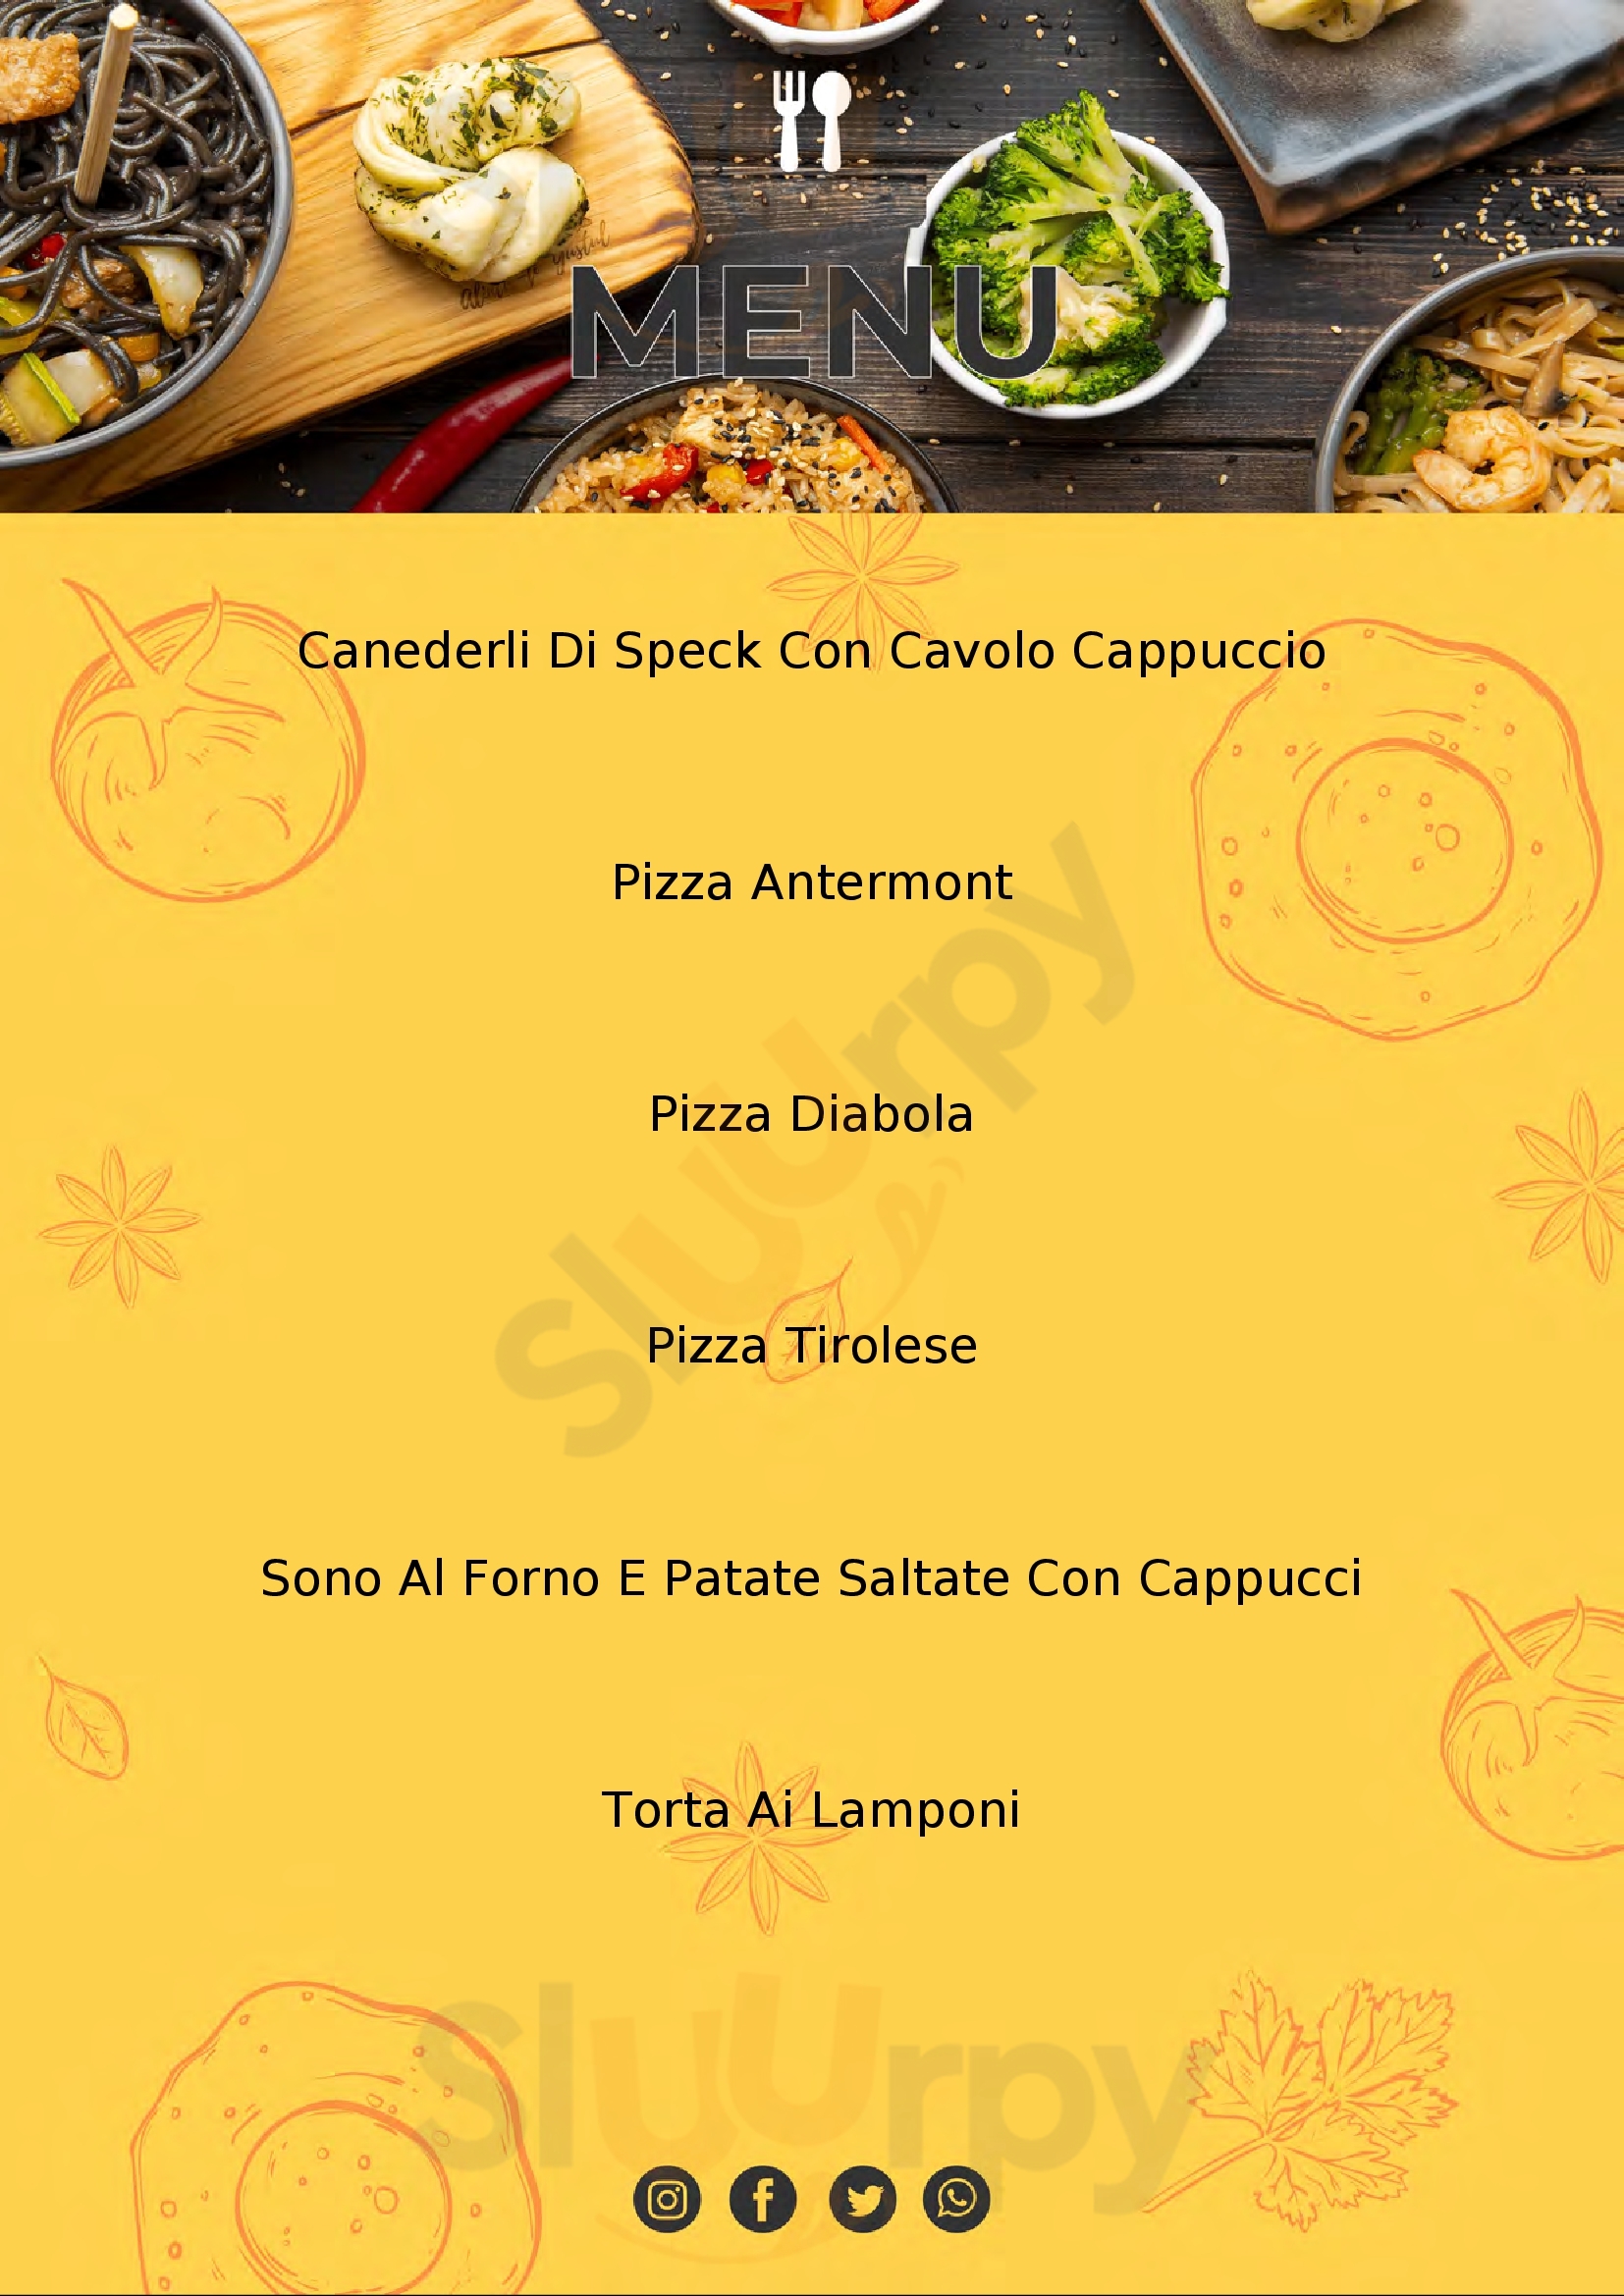 Ristorante Pizzeria Antermont Trento menù 1 pagina